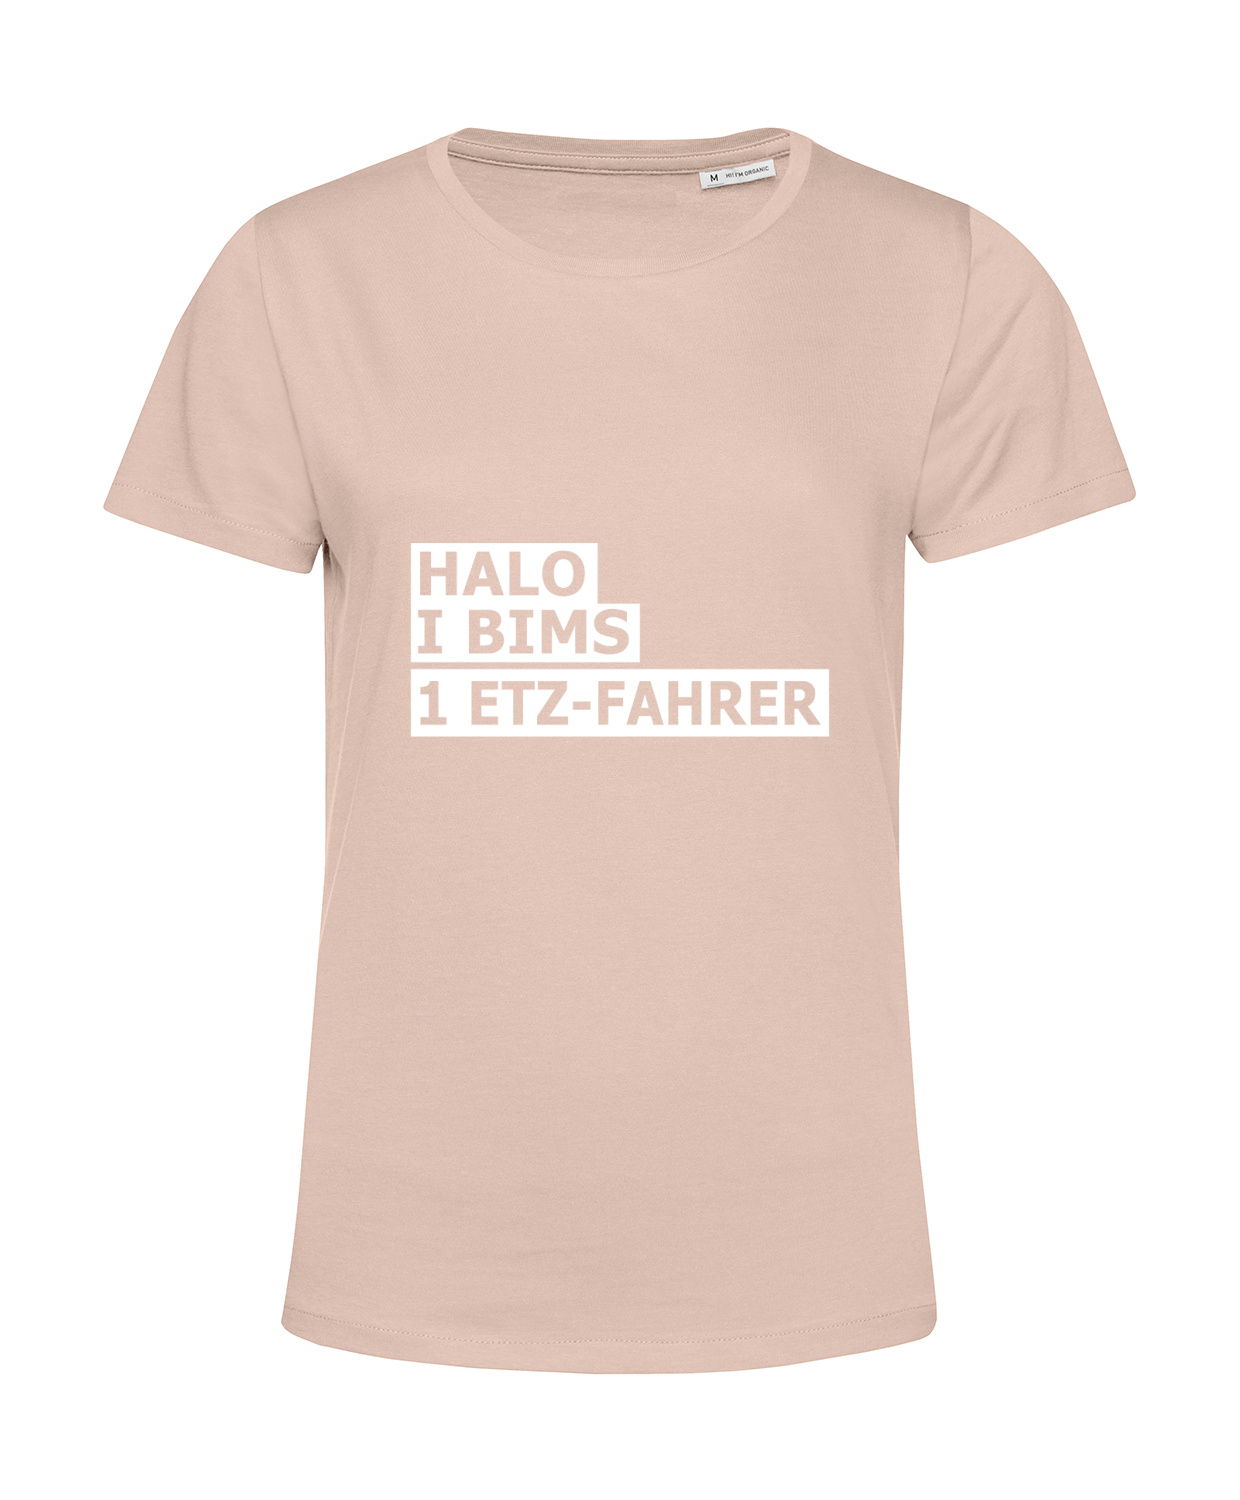 Nachhaltiges T-Shirt Damen 2Takter - Halo I bims 1 ETZ-Fahrer